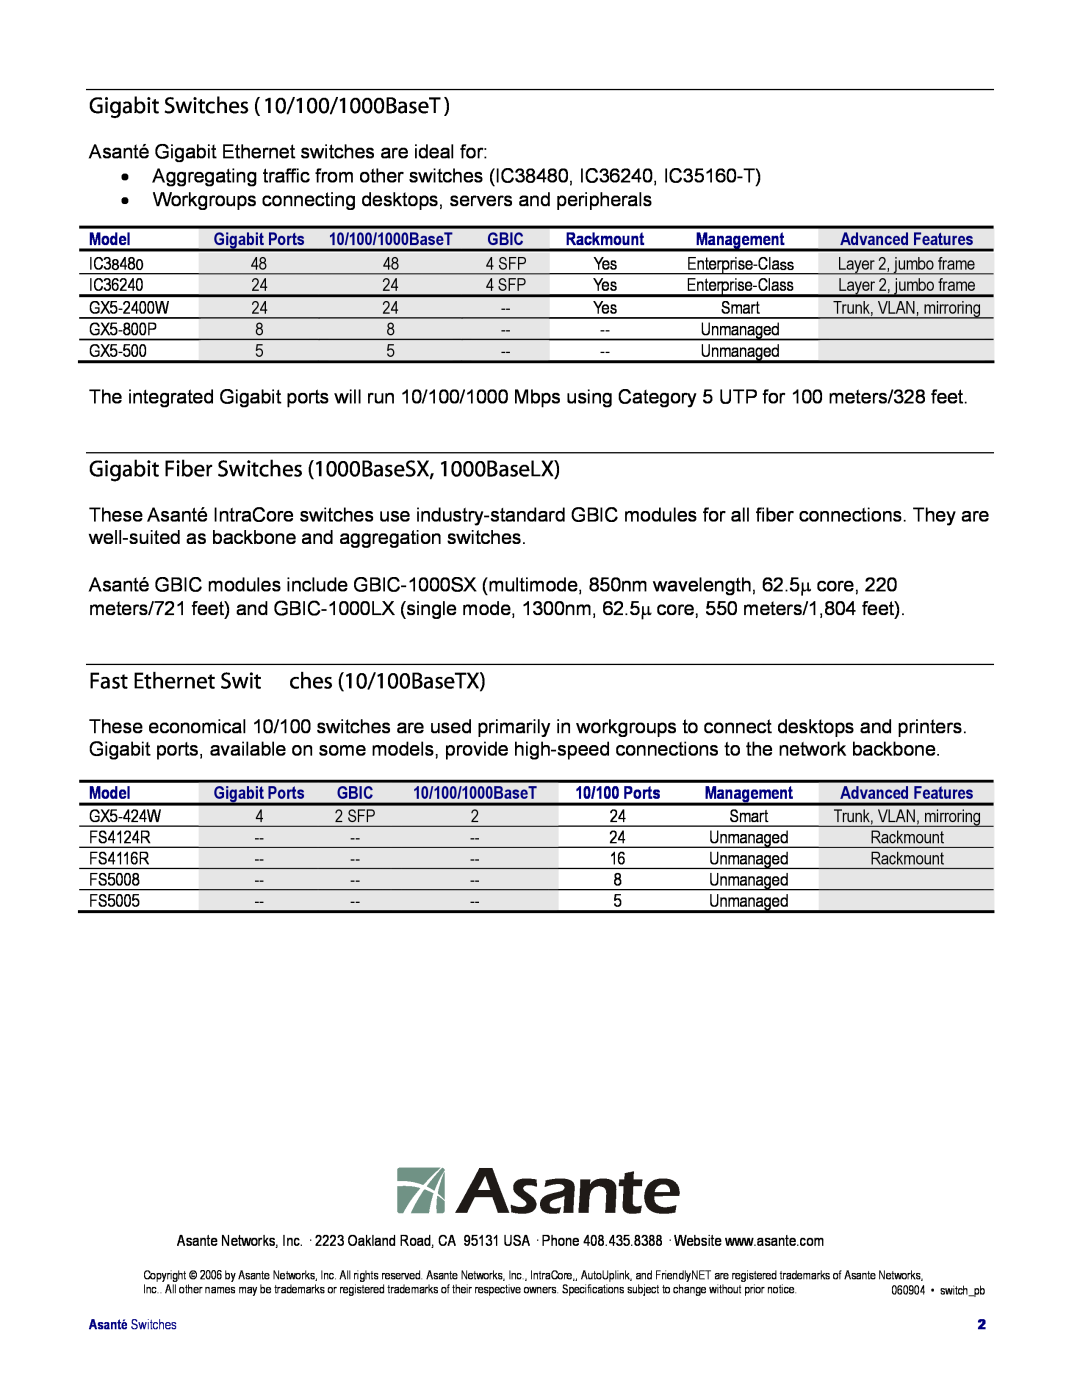 Asante Technologies IC38480 manual Gigabit Switches 10/100/1000BaseT, Gigabit Fiber Switches 1000BaseSX, 1000BaseLX 